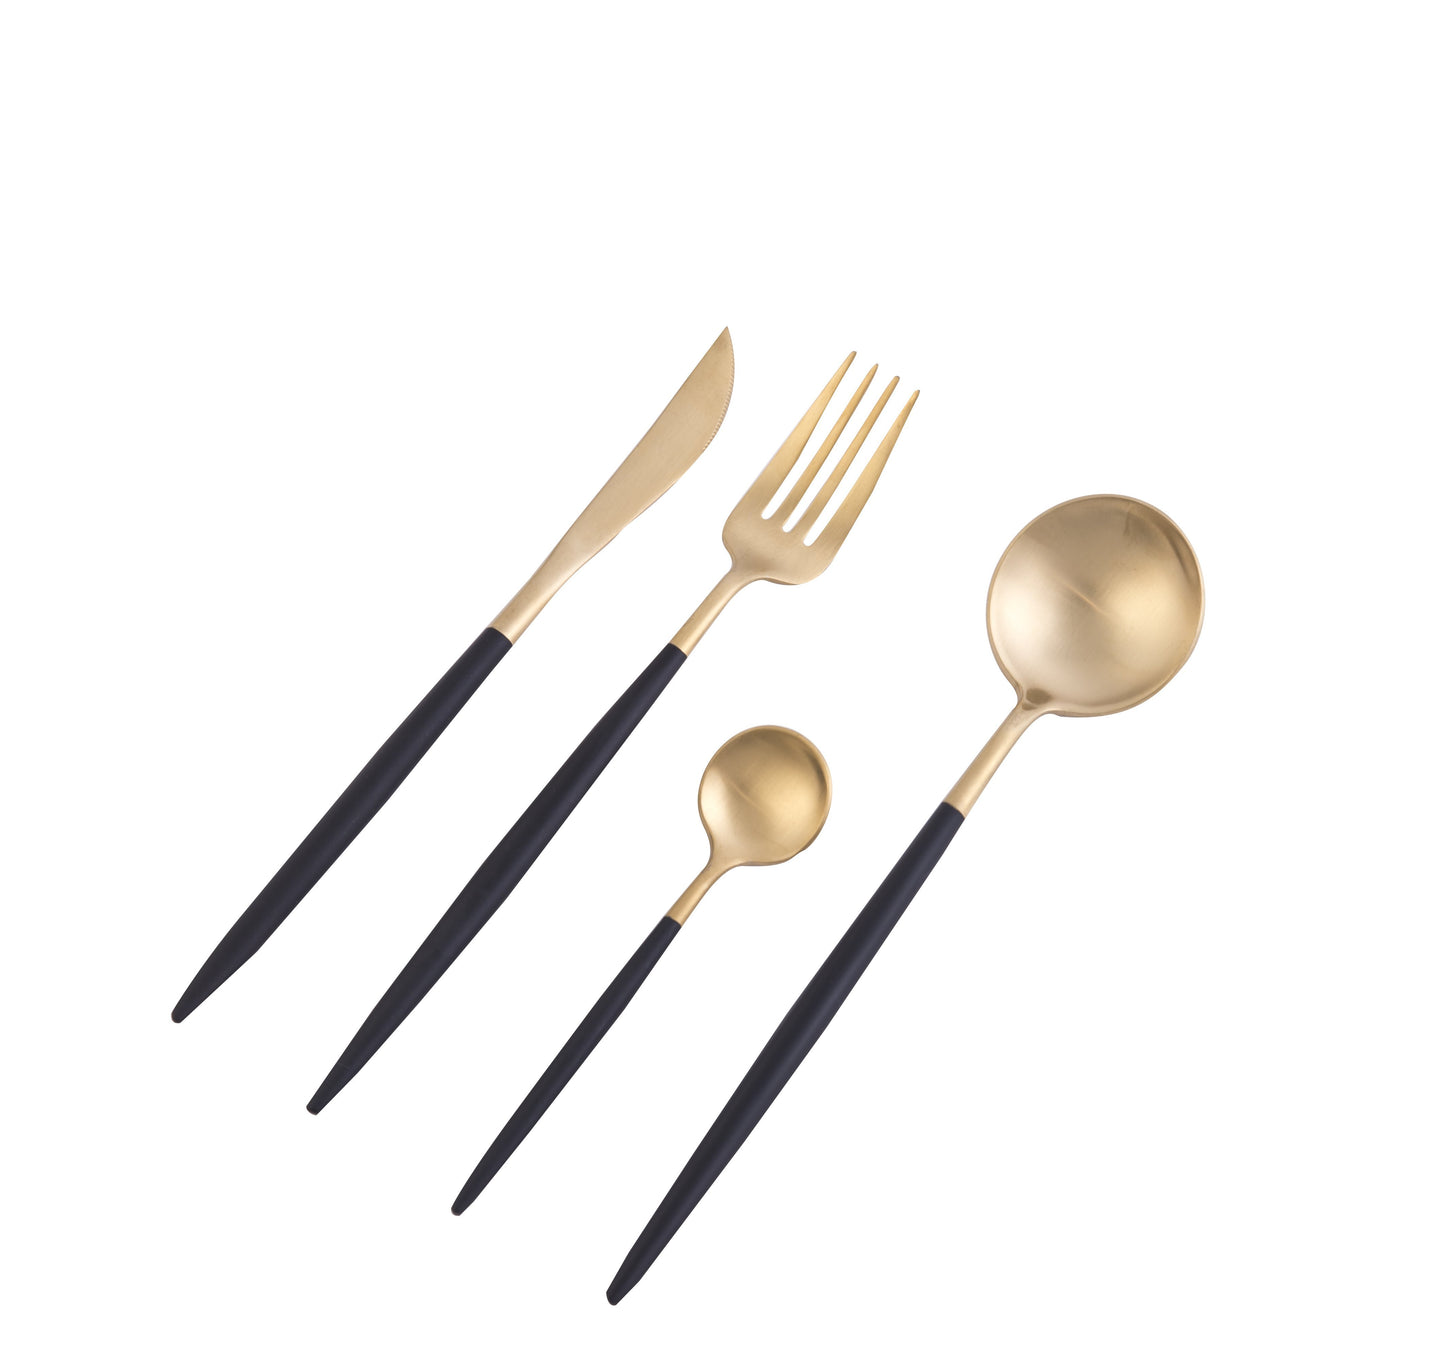 Dubai 16 Piece Cutlery Set - Black and Gold